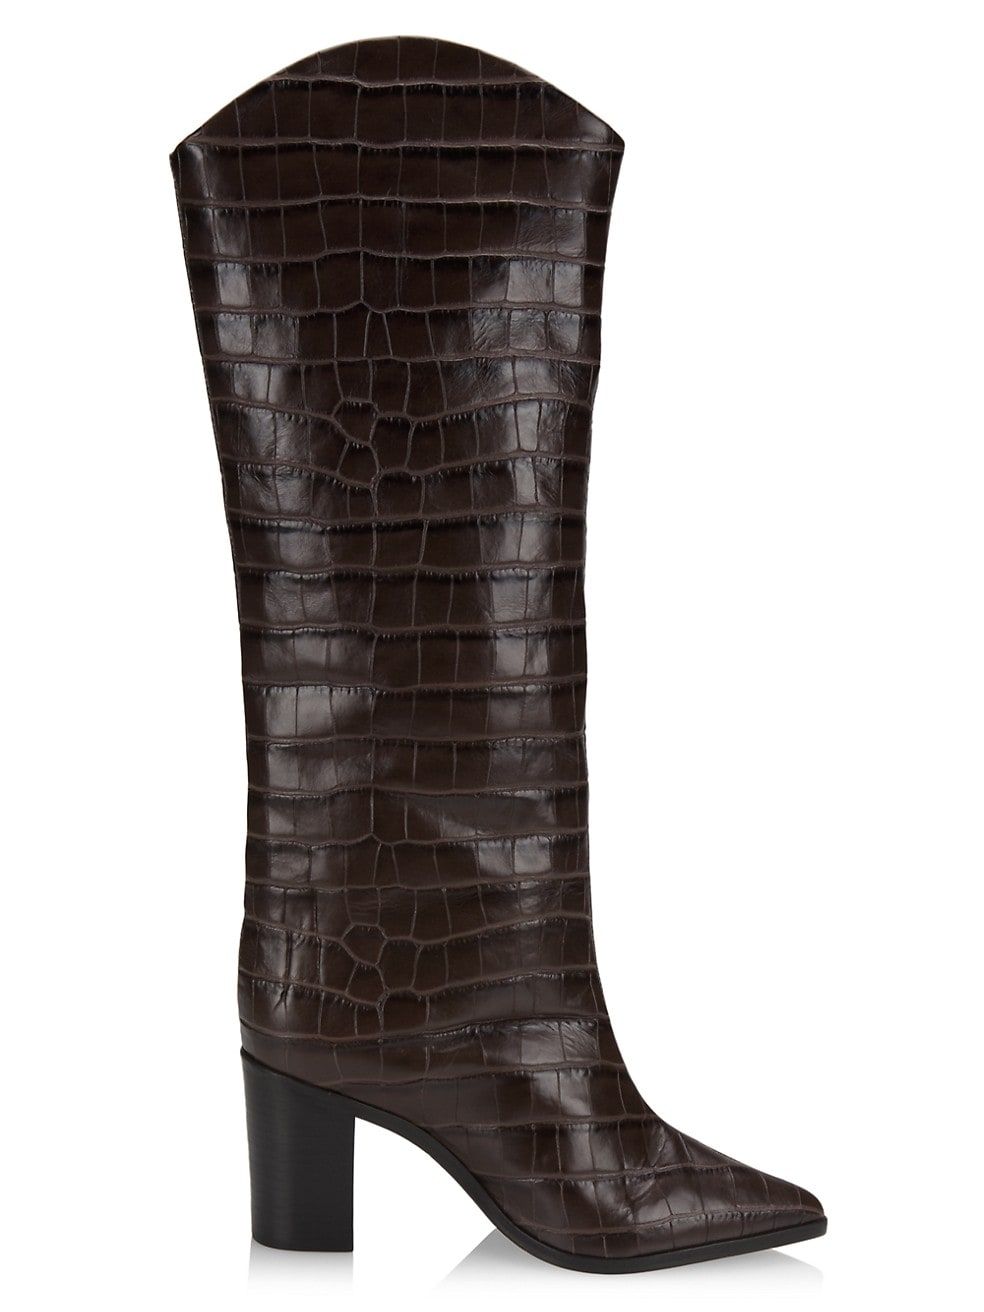 Schutz Analeah Leather High-Heel Boots | Saks Fifth Avenue